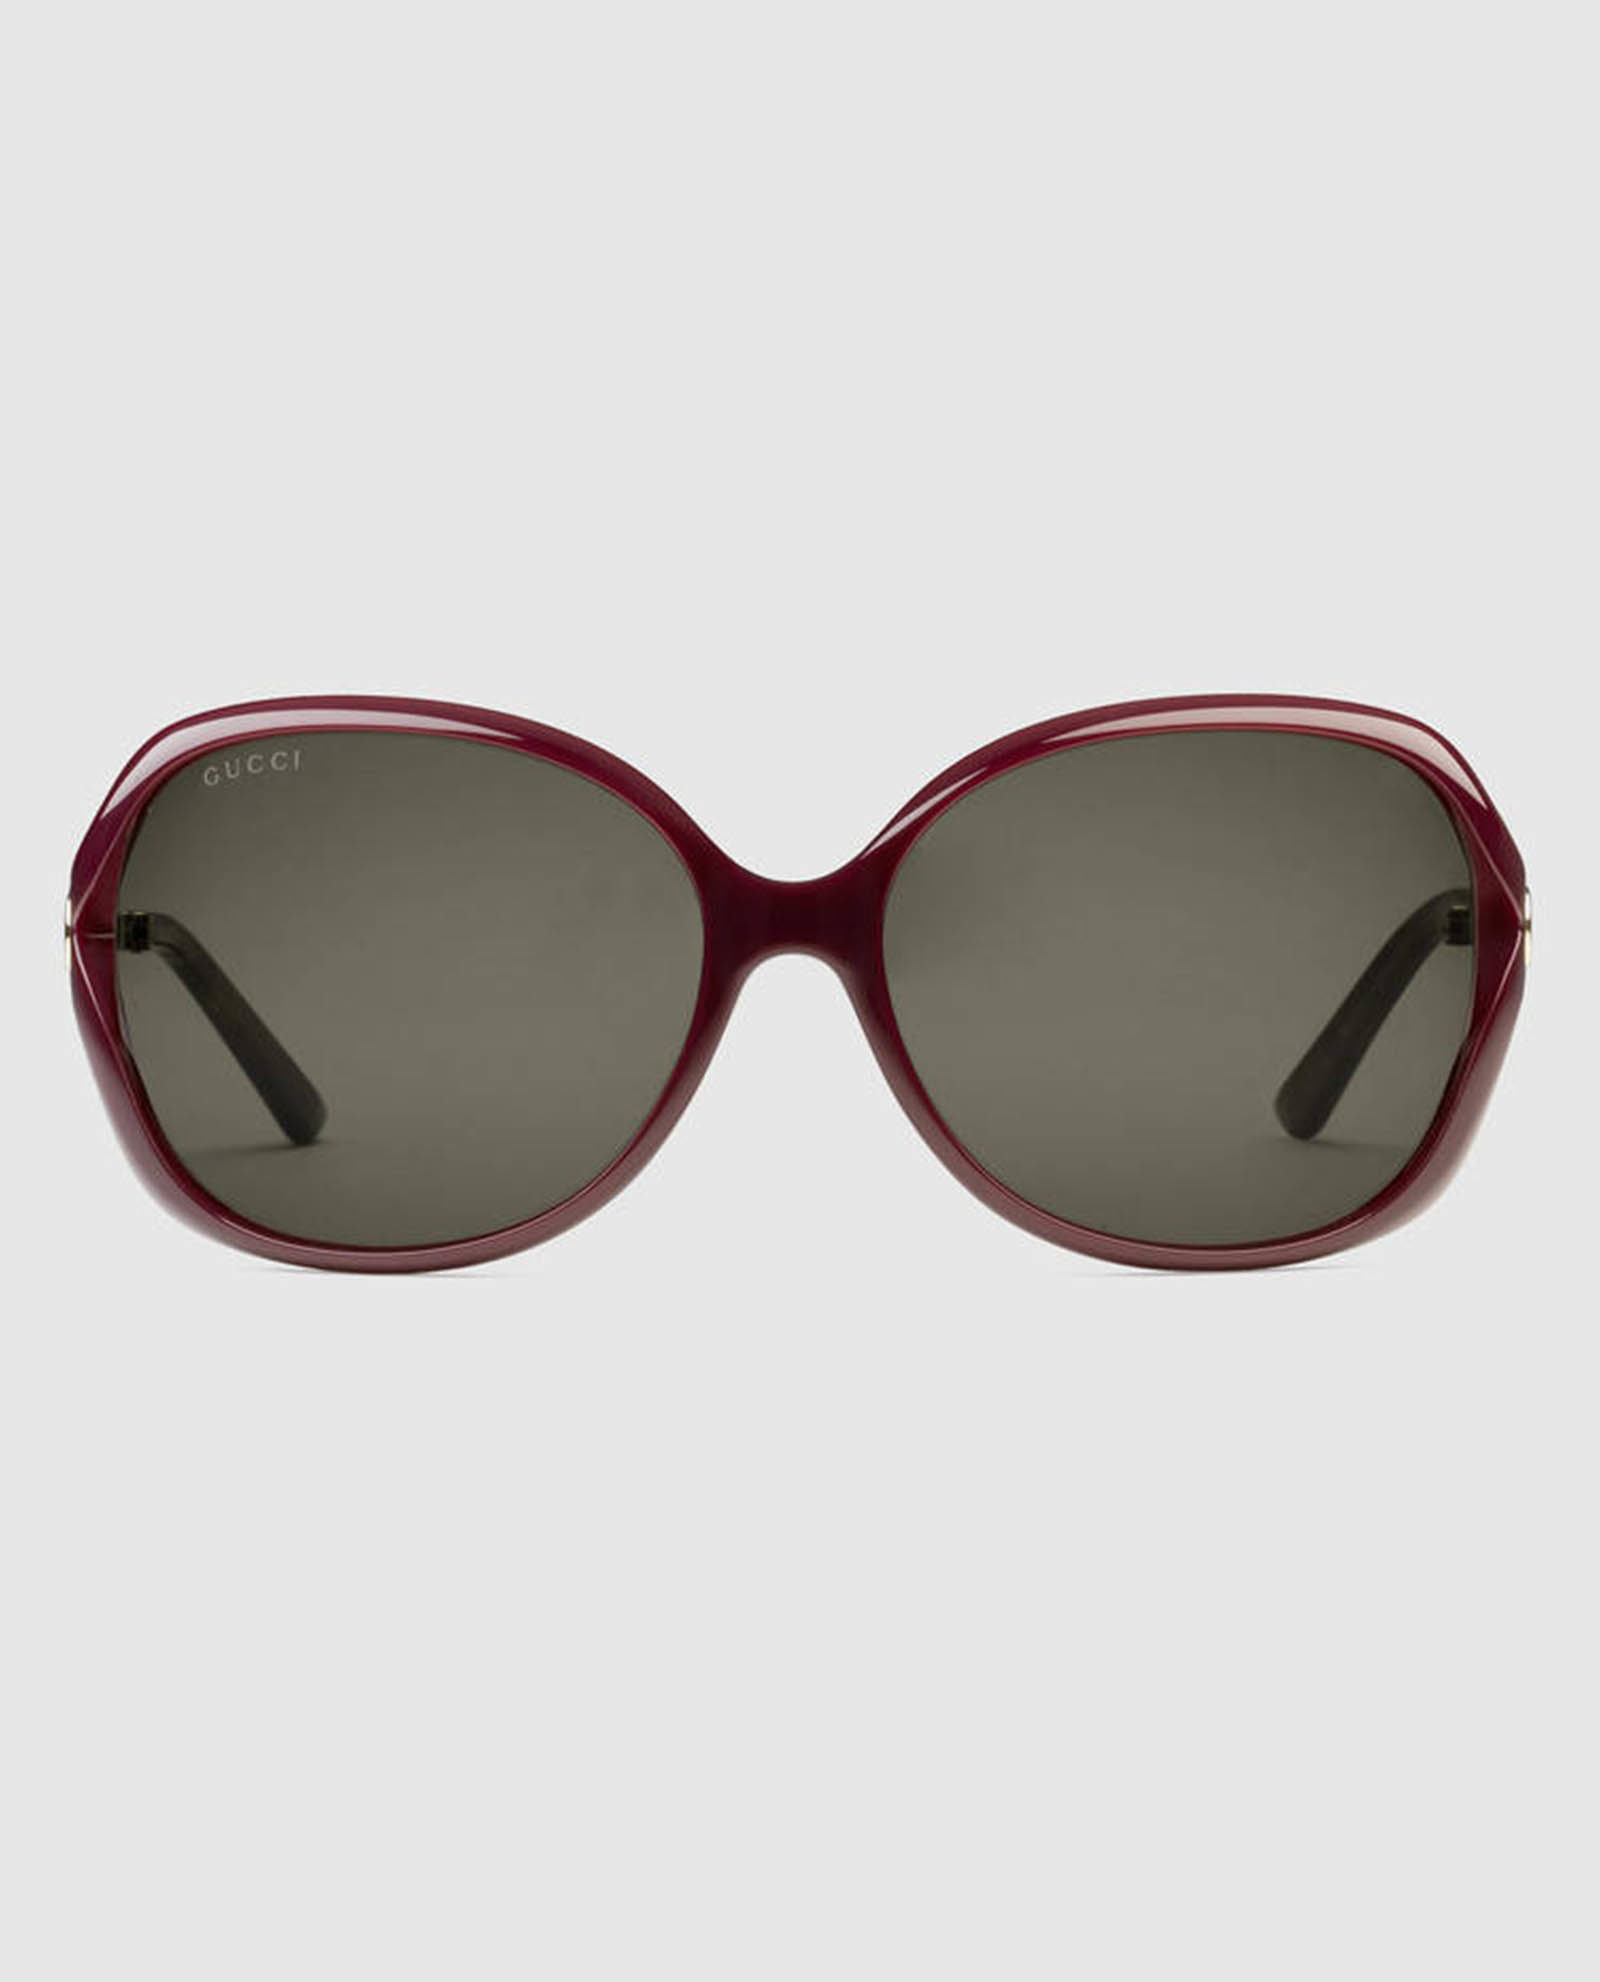 461659_J0731_6011_001_100_0000_Light-Oversize-round-frame-acetate-and-metal-sunglasses